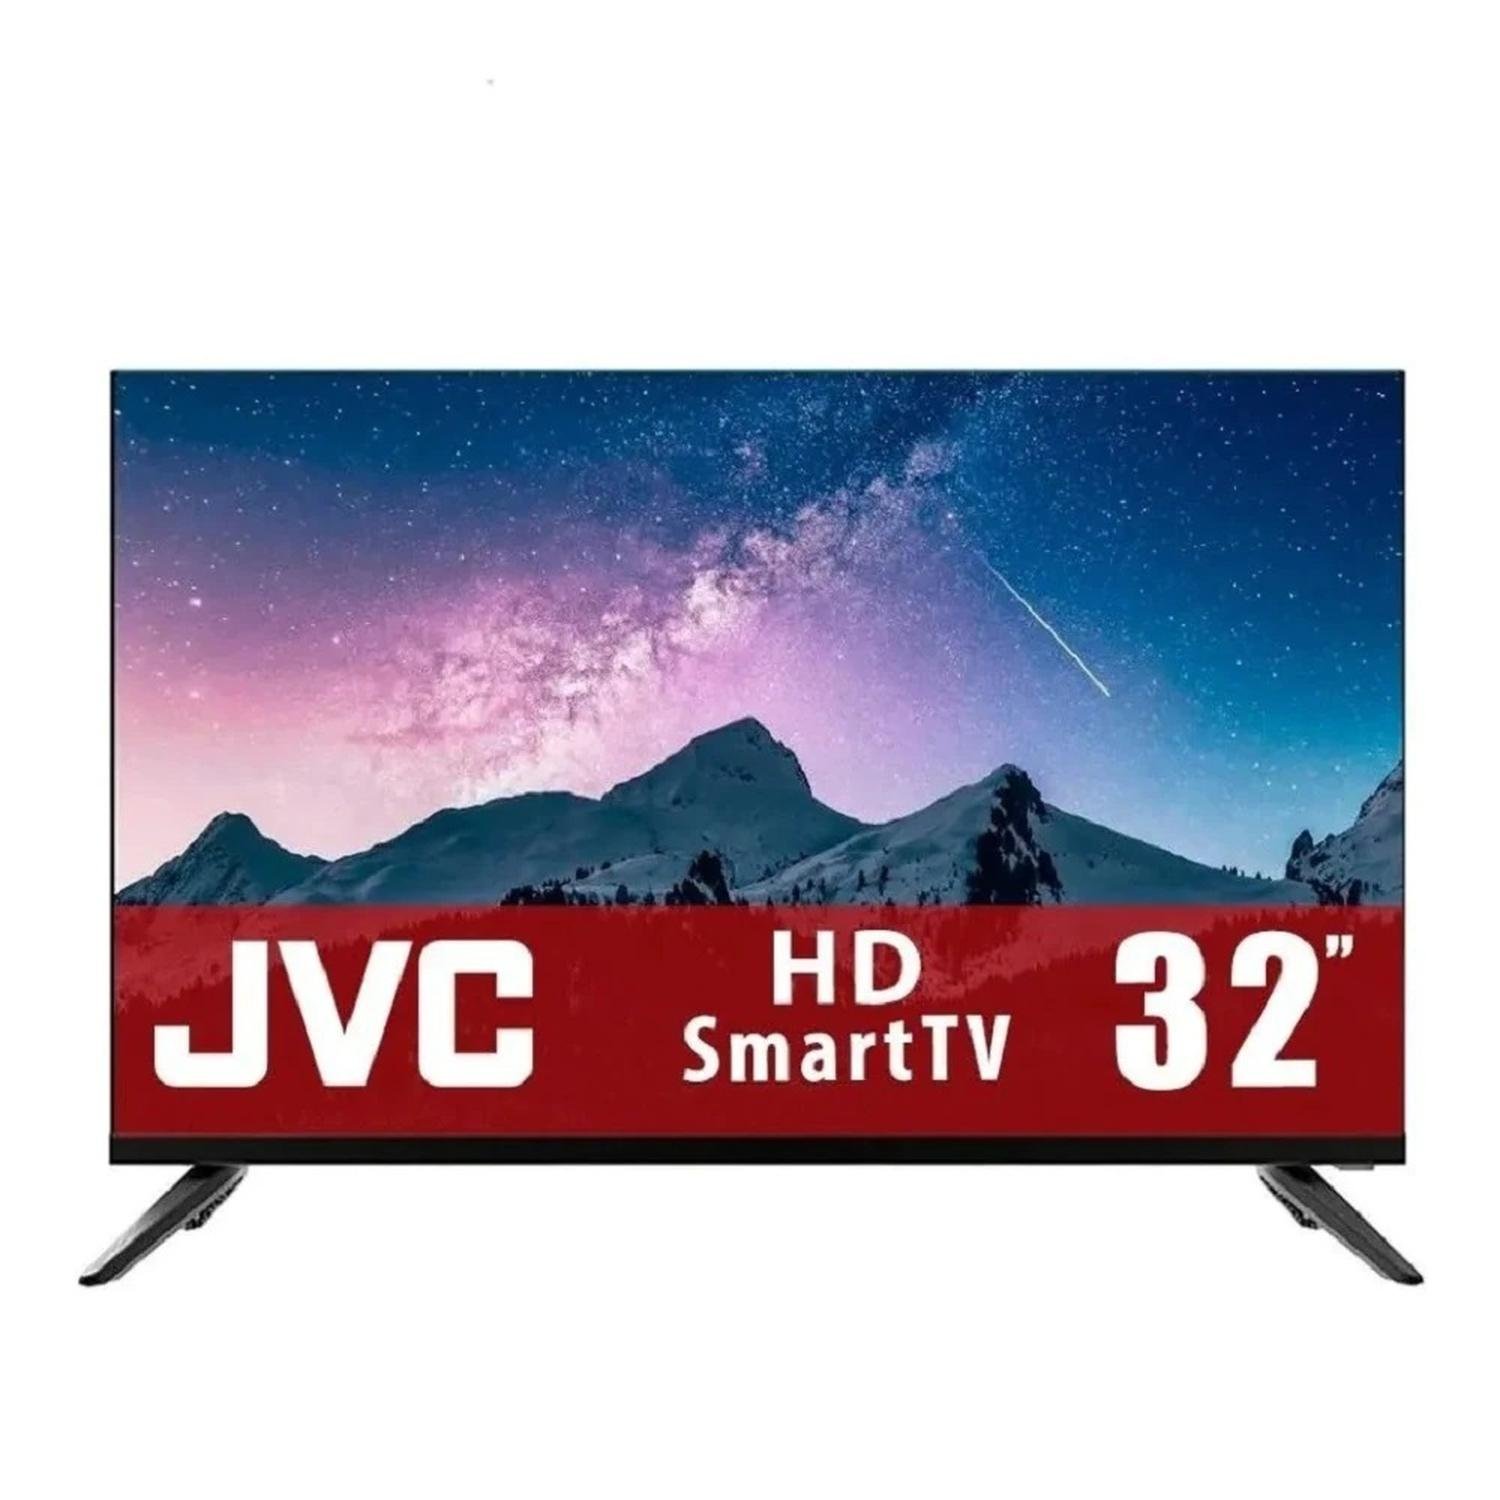 Television Pantalla 24 Pulgadas Smart TV FULL LED Roku JVC